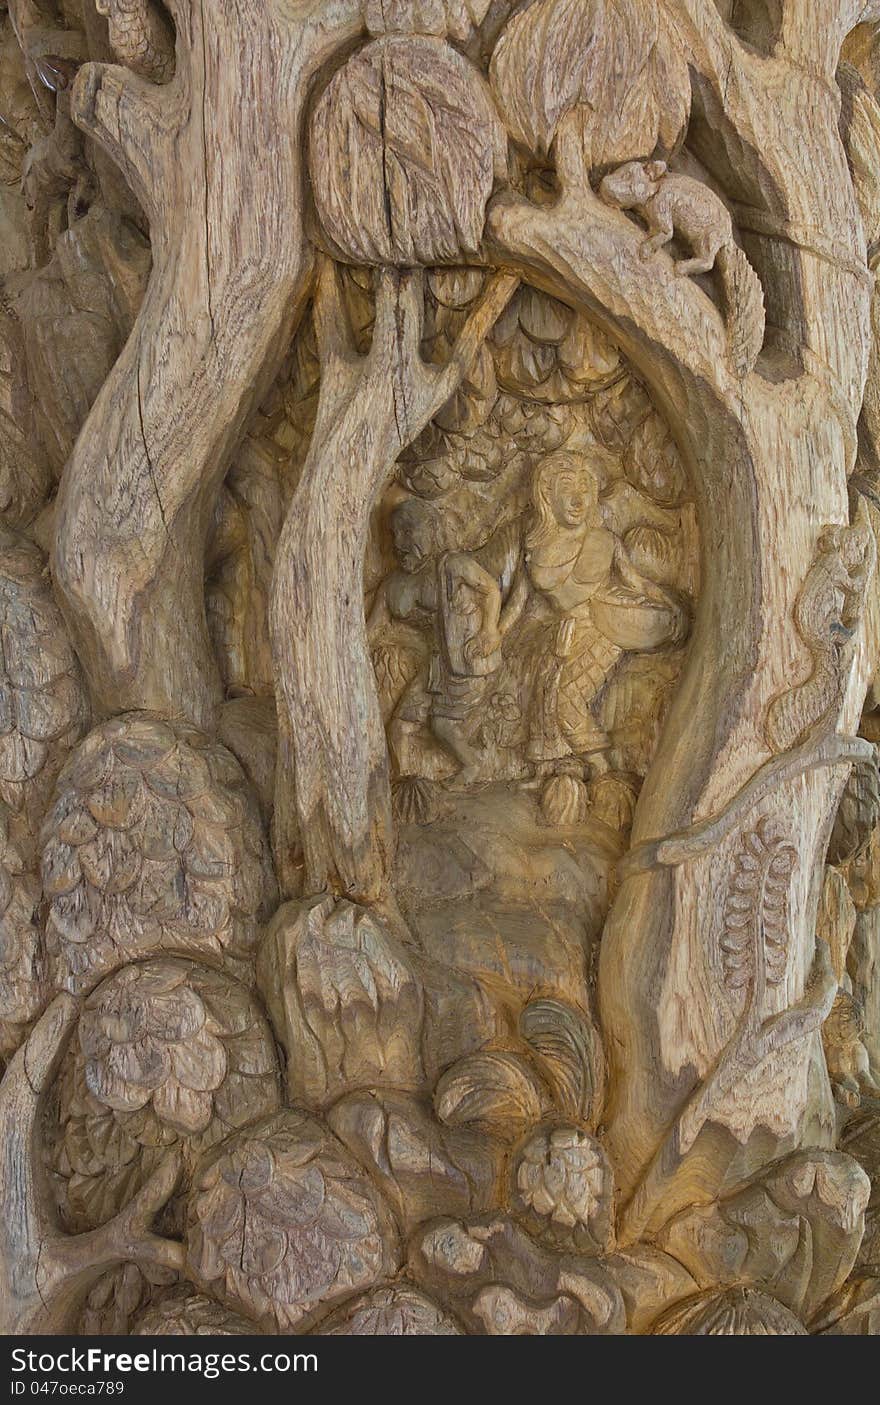 Teak-wood carving is a form of literature. Teak-wood carving is a form of literature.